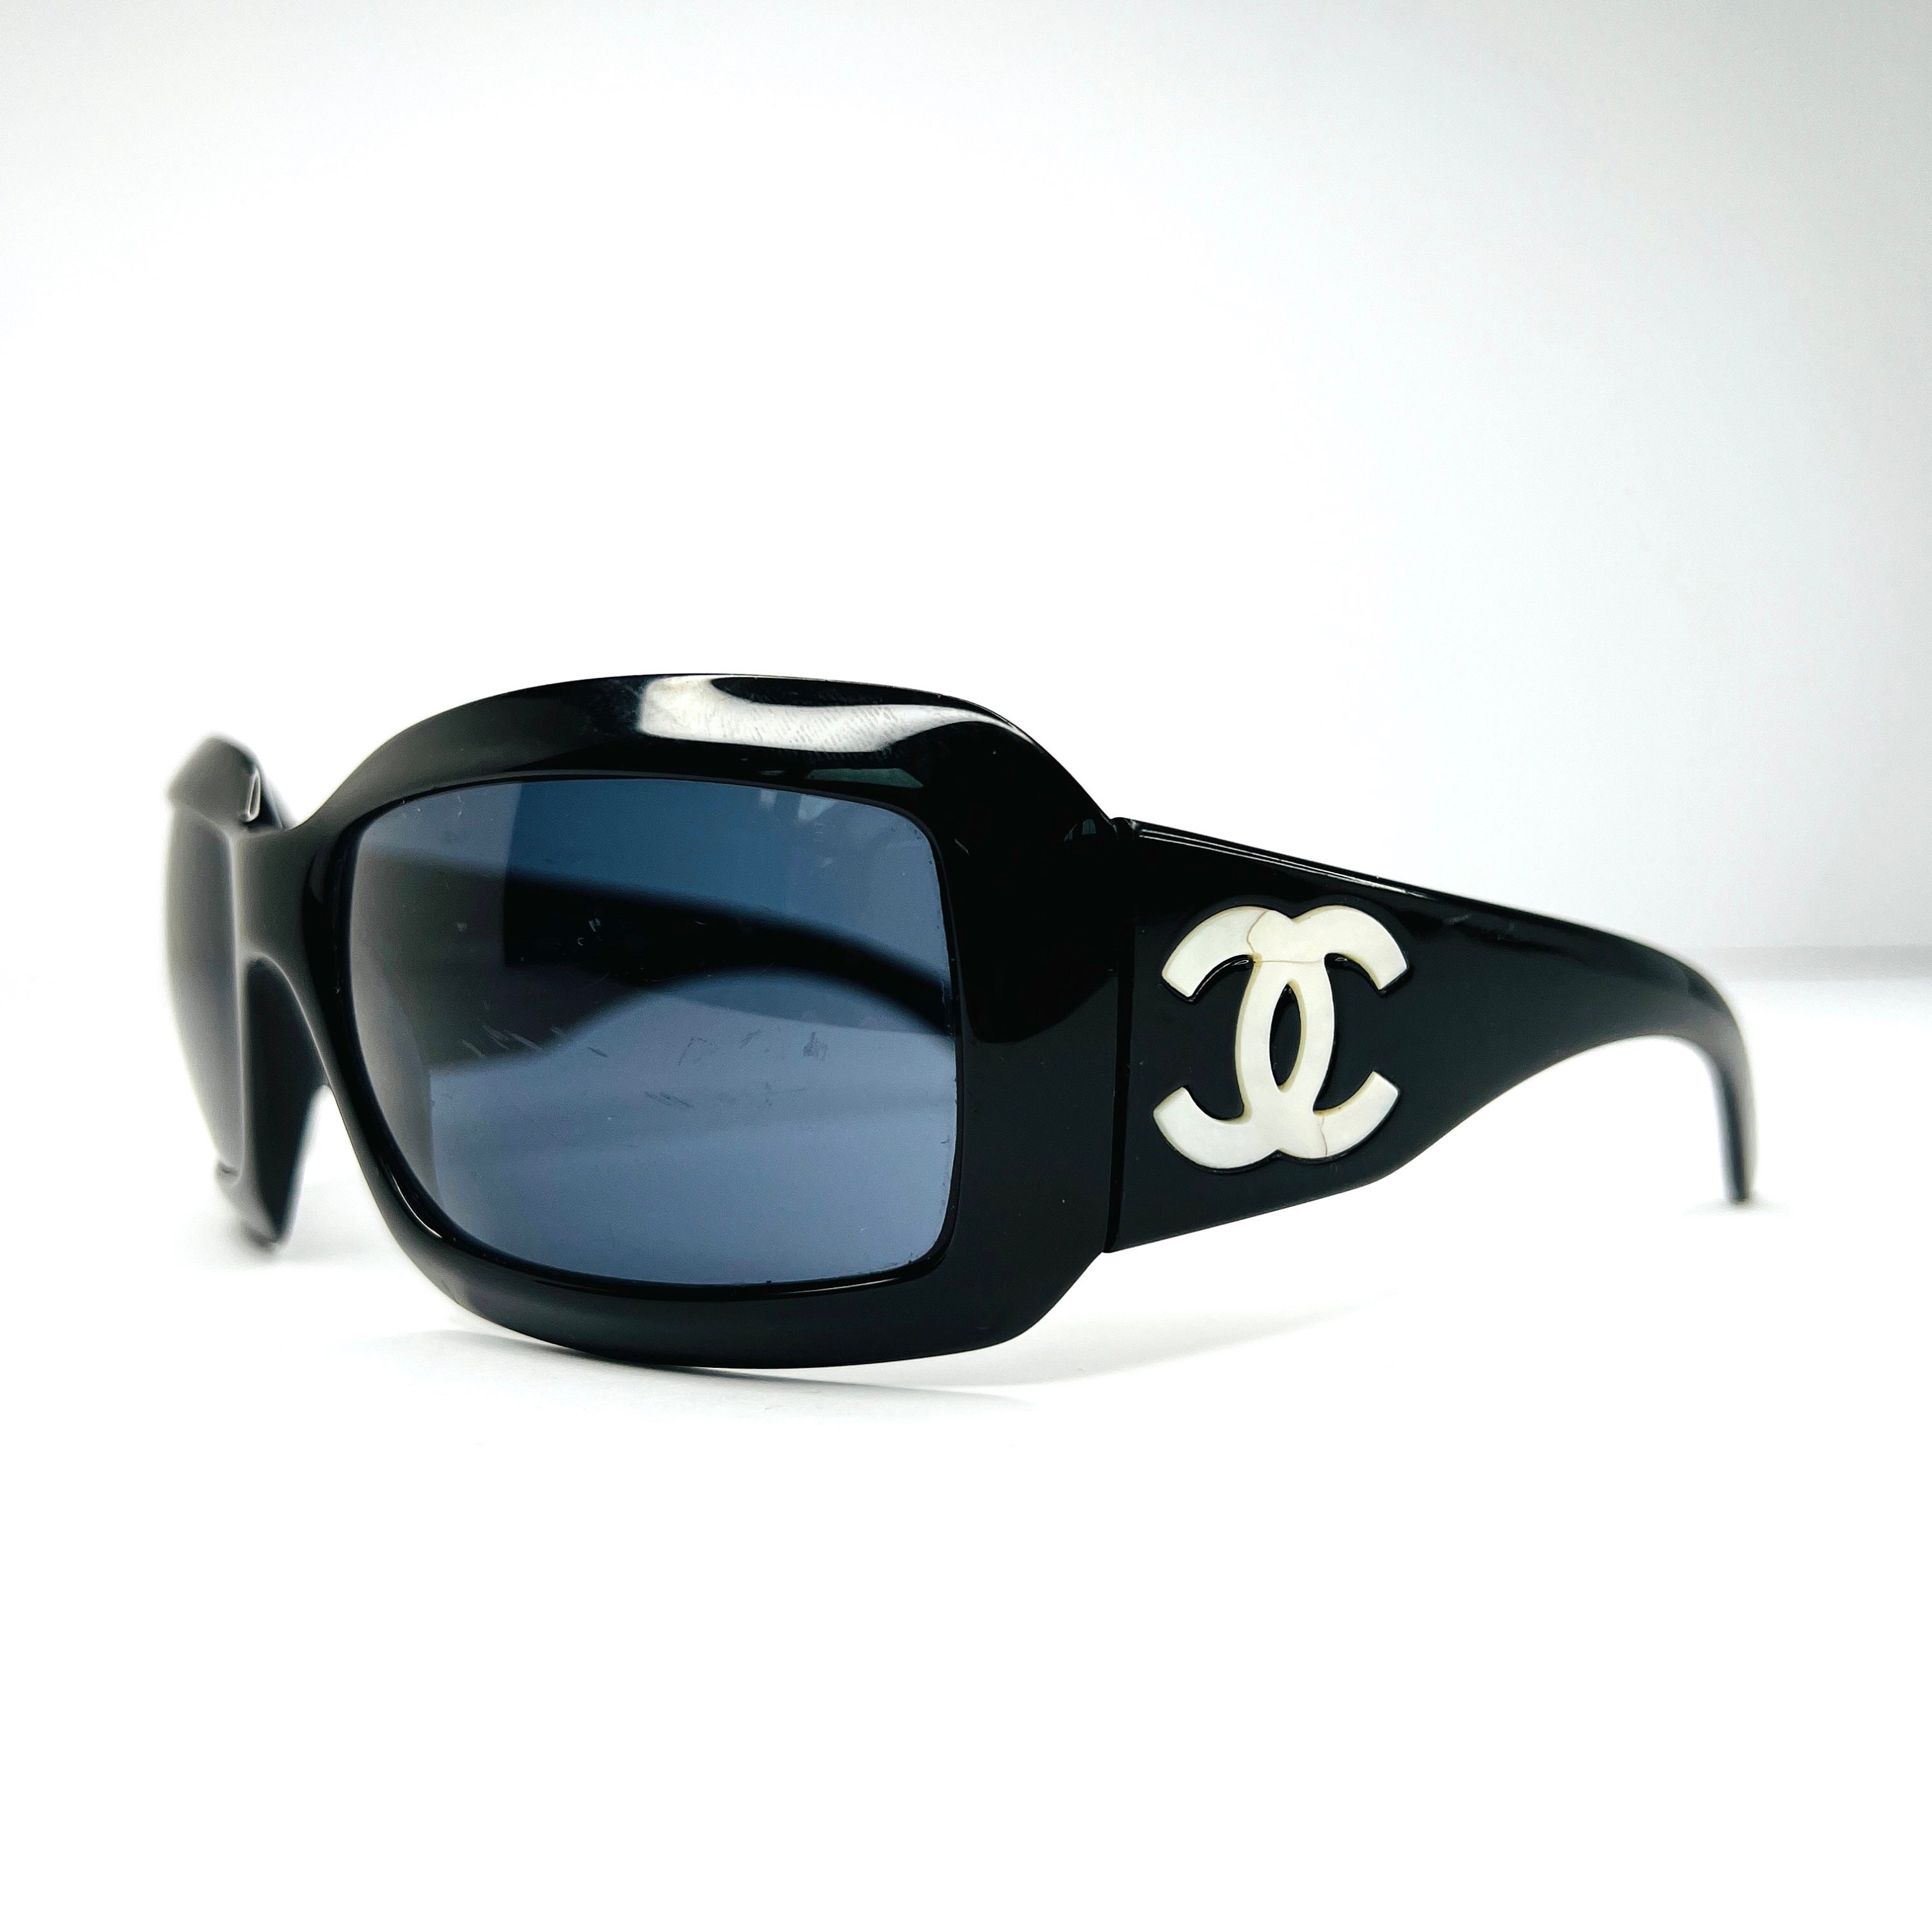 Vintage Chanel Neon Green Frame Sunglasses Logo Glasses